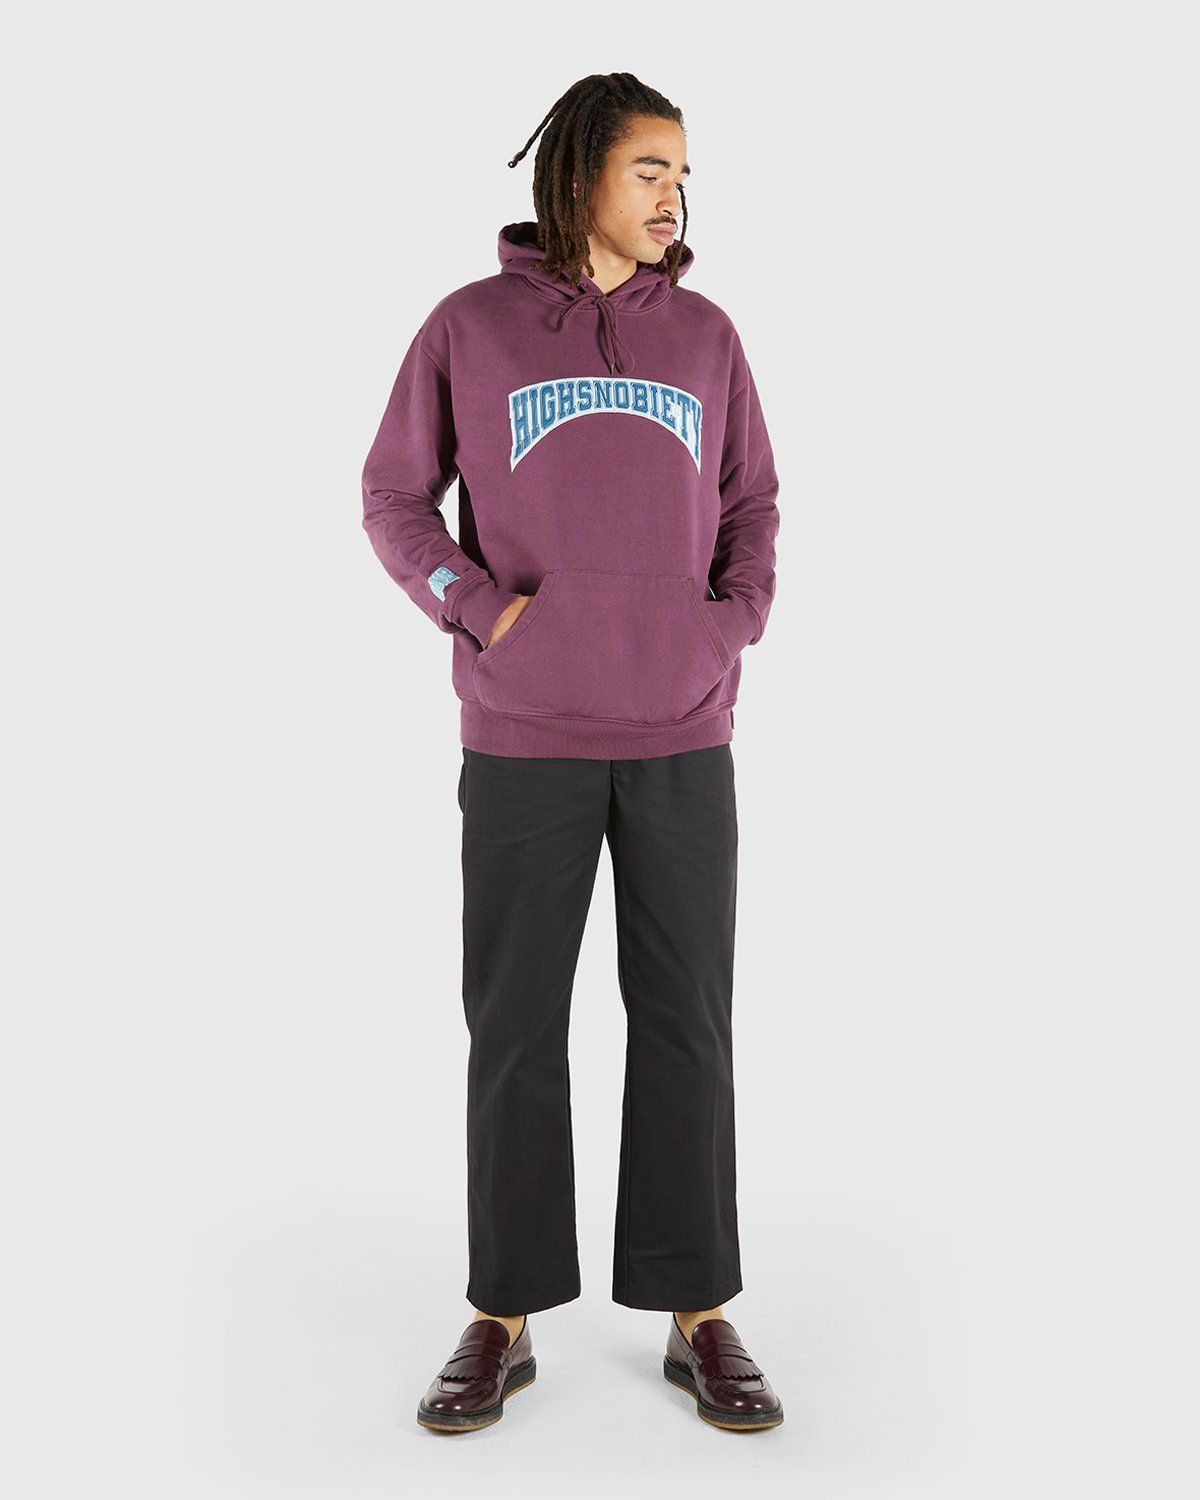 Highsnobiety – Collegiate Hoodie Purple - Sweats - Purple - Image 6